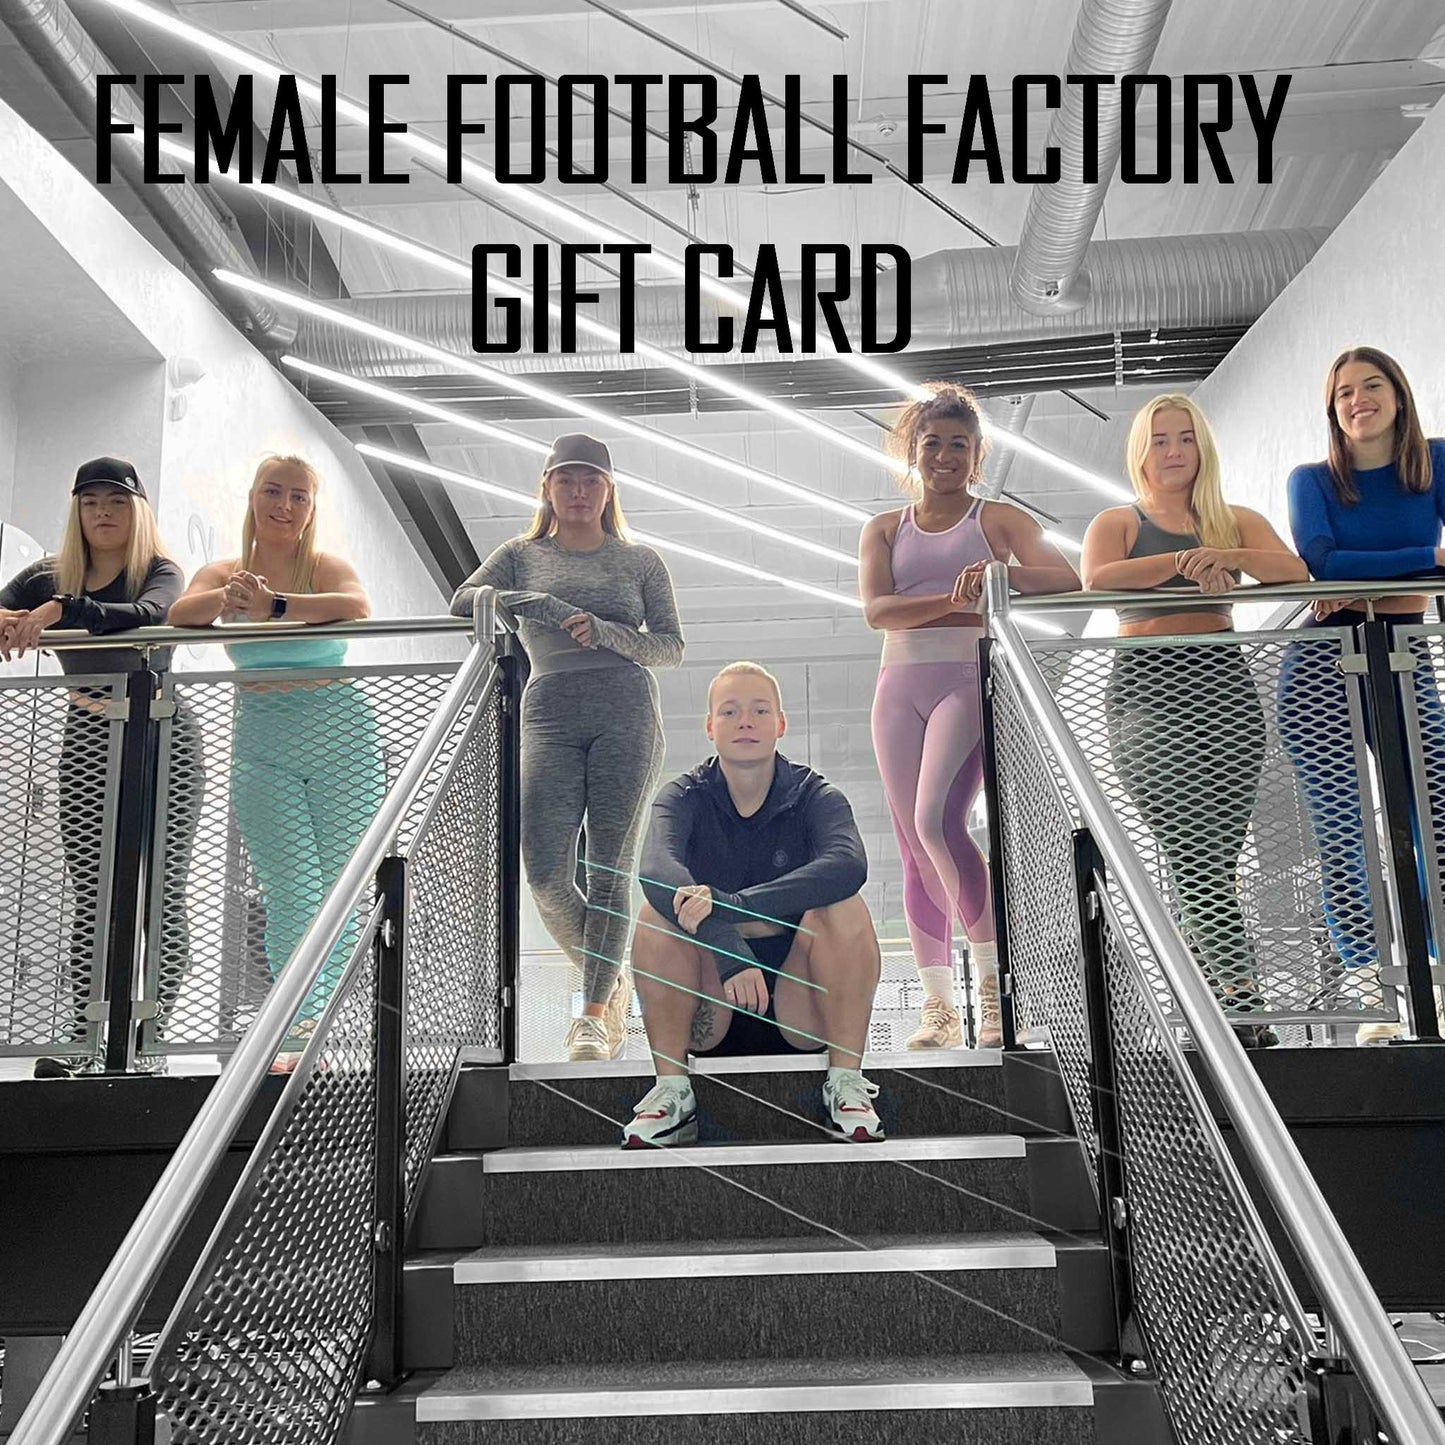 FEMALE FOOTBALL FACTORY GIFT CARD